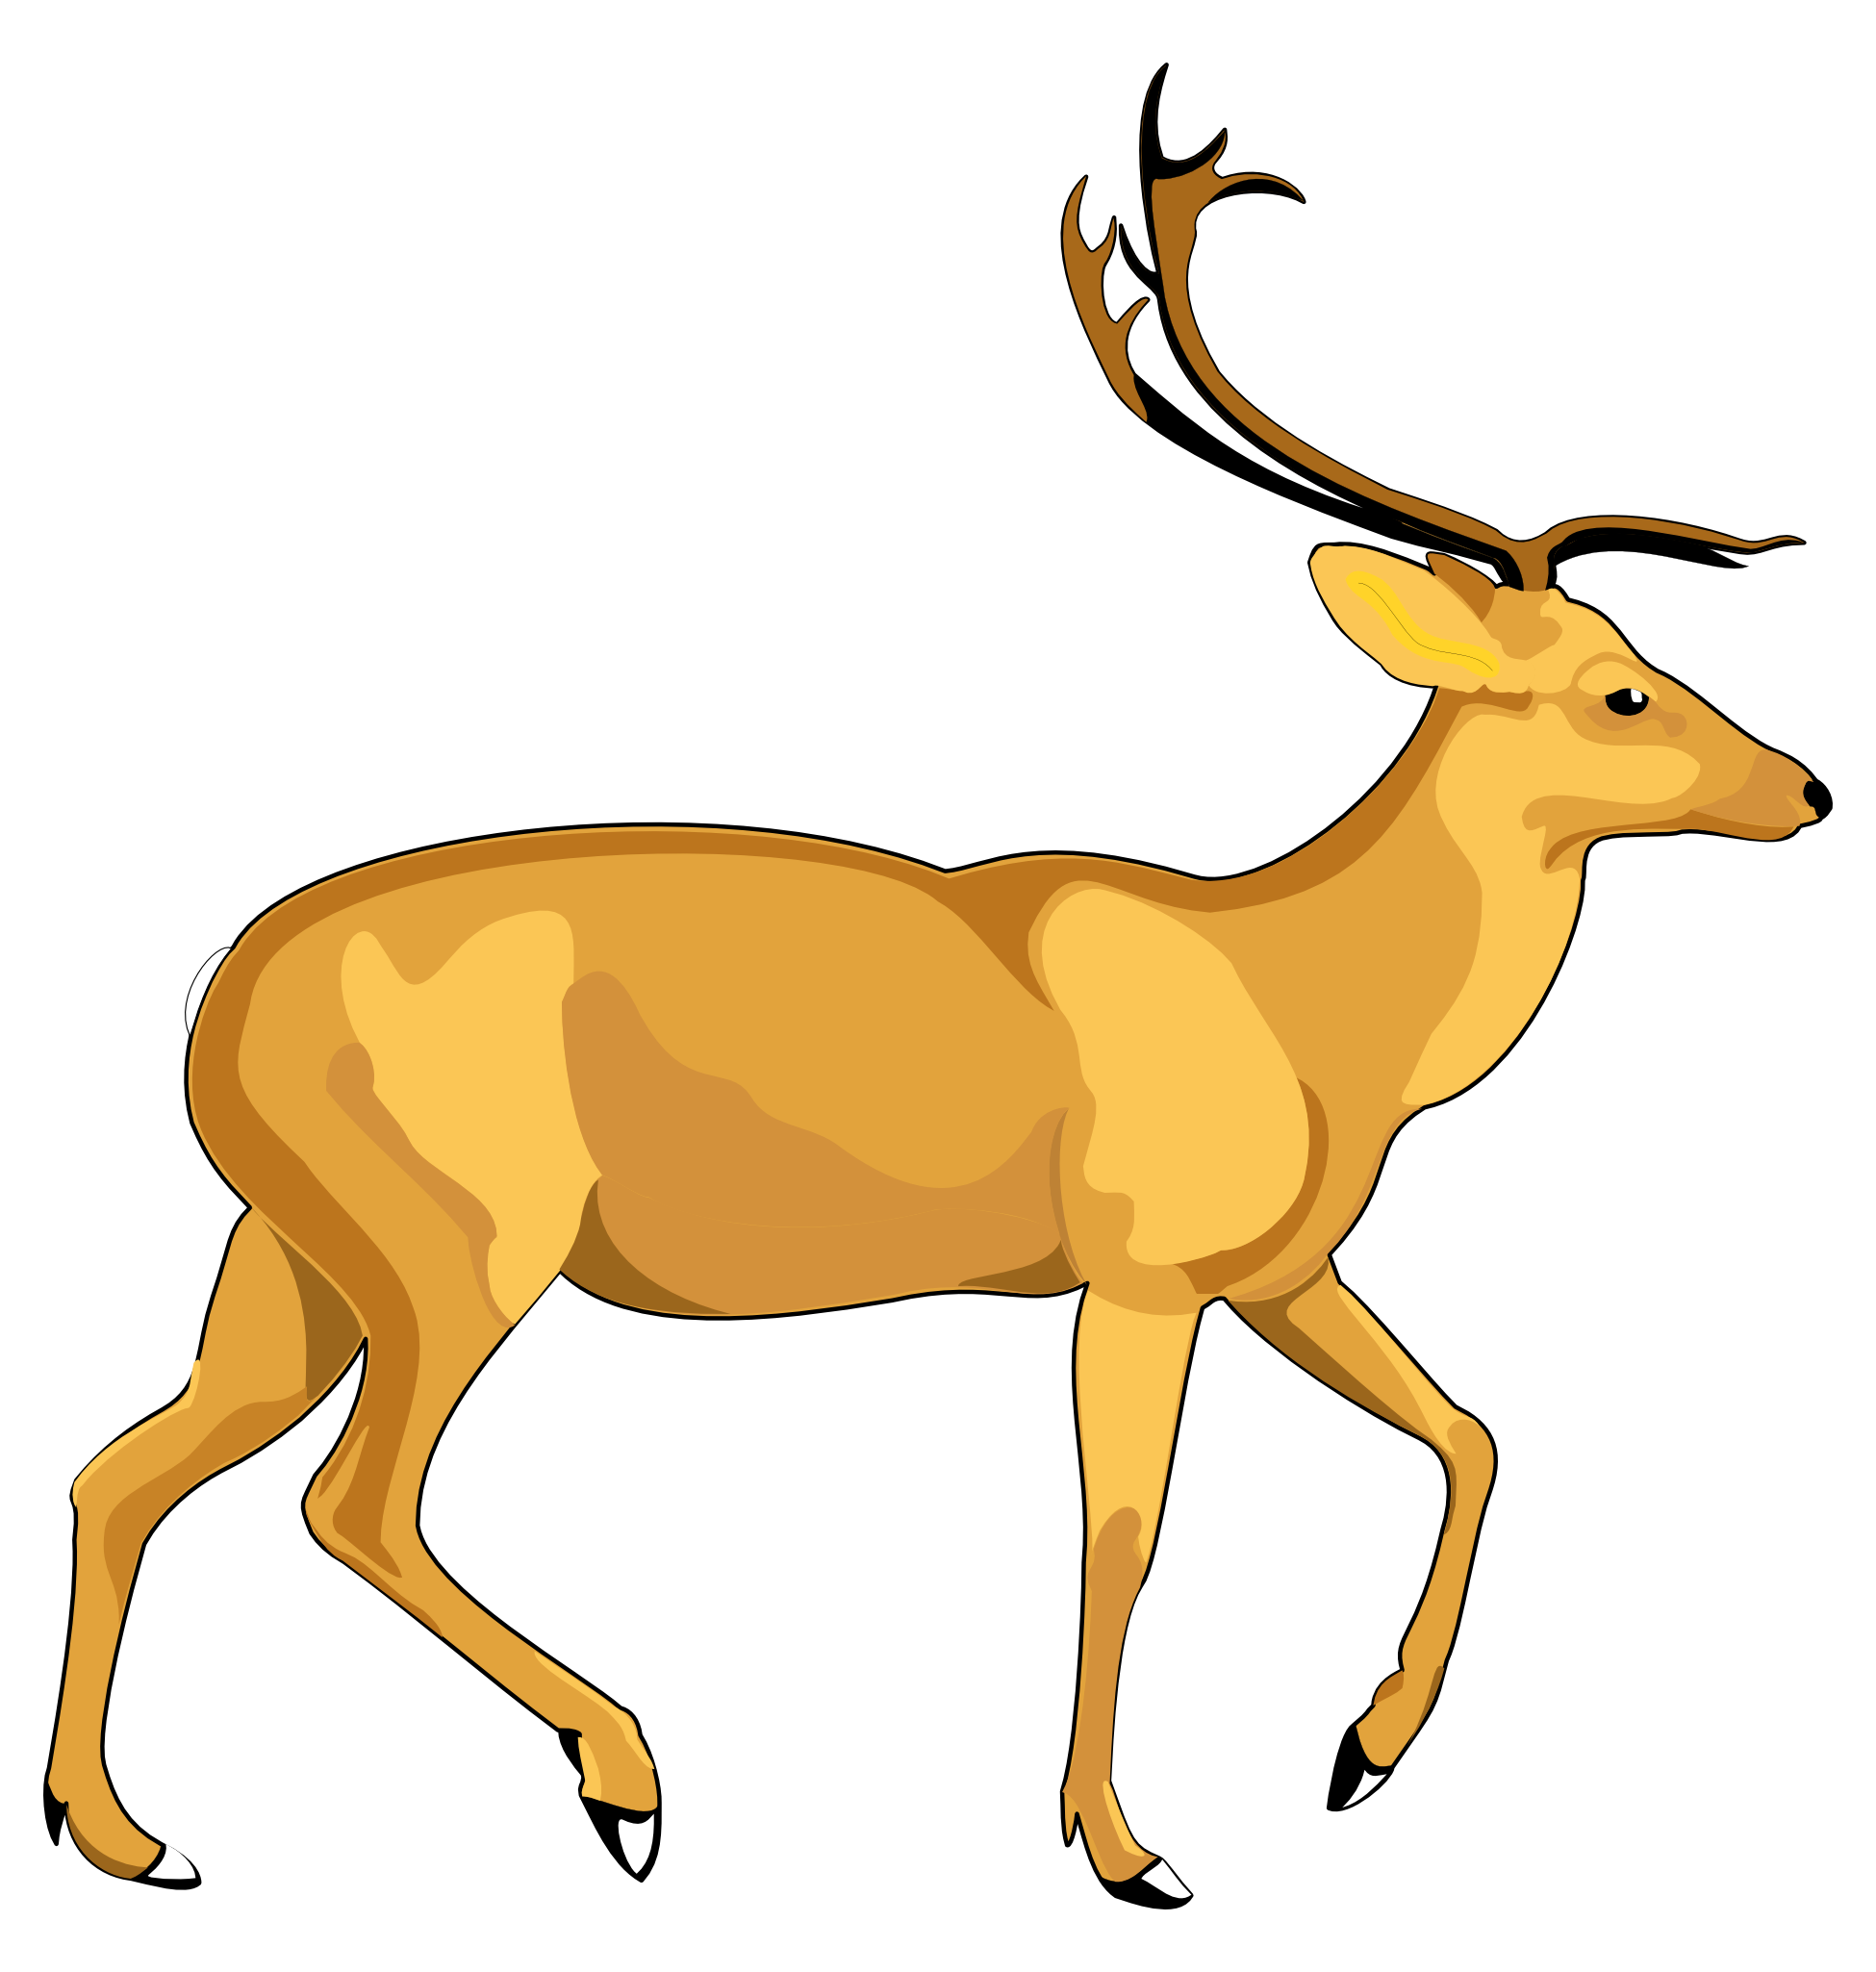 Deer Vector PNG Image - PurePNG | Free transparent CC0 PNG Image Library